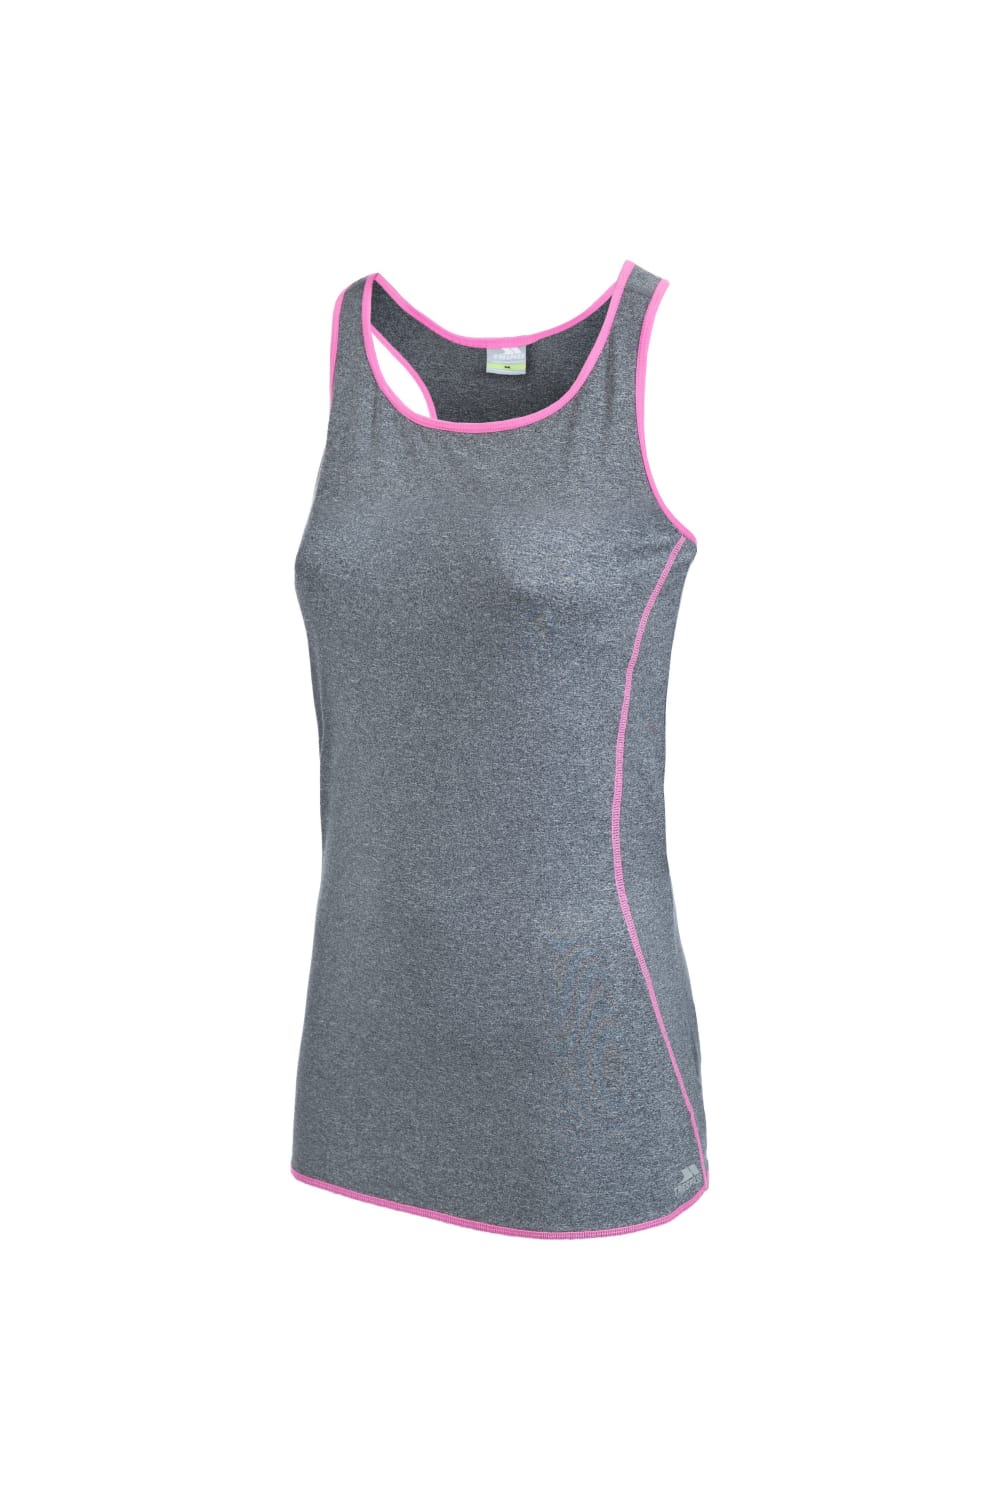 Trespass Womens/Ladies Laney Sleeveless Active Vest Top (Smoke Marl)